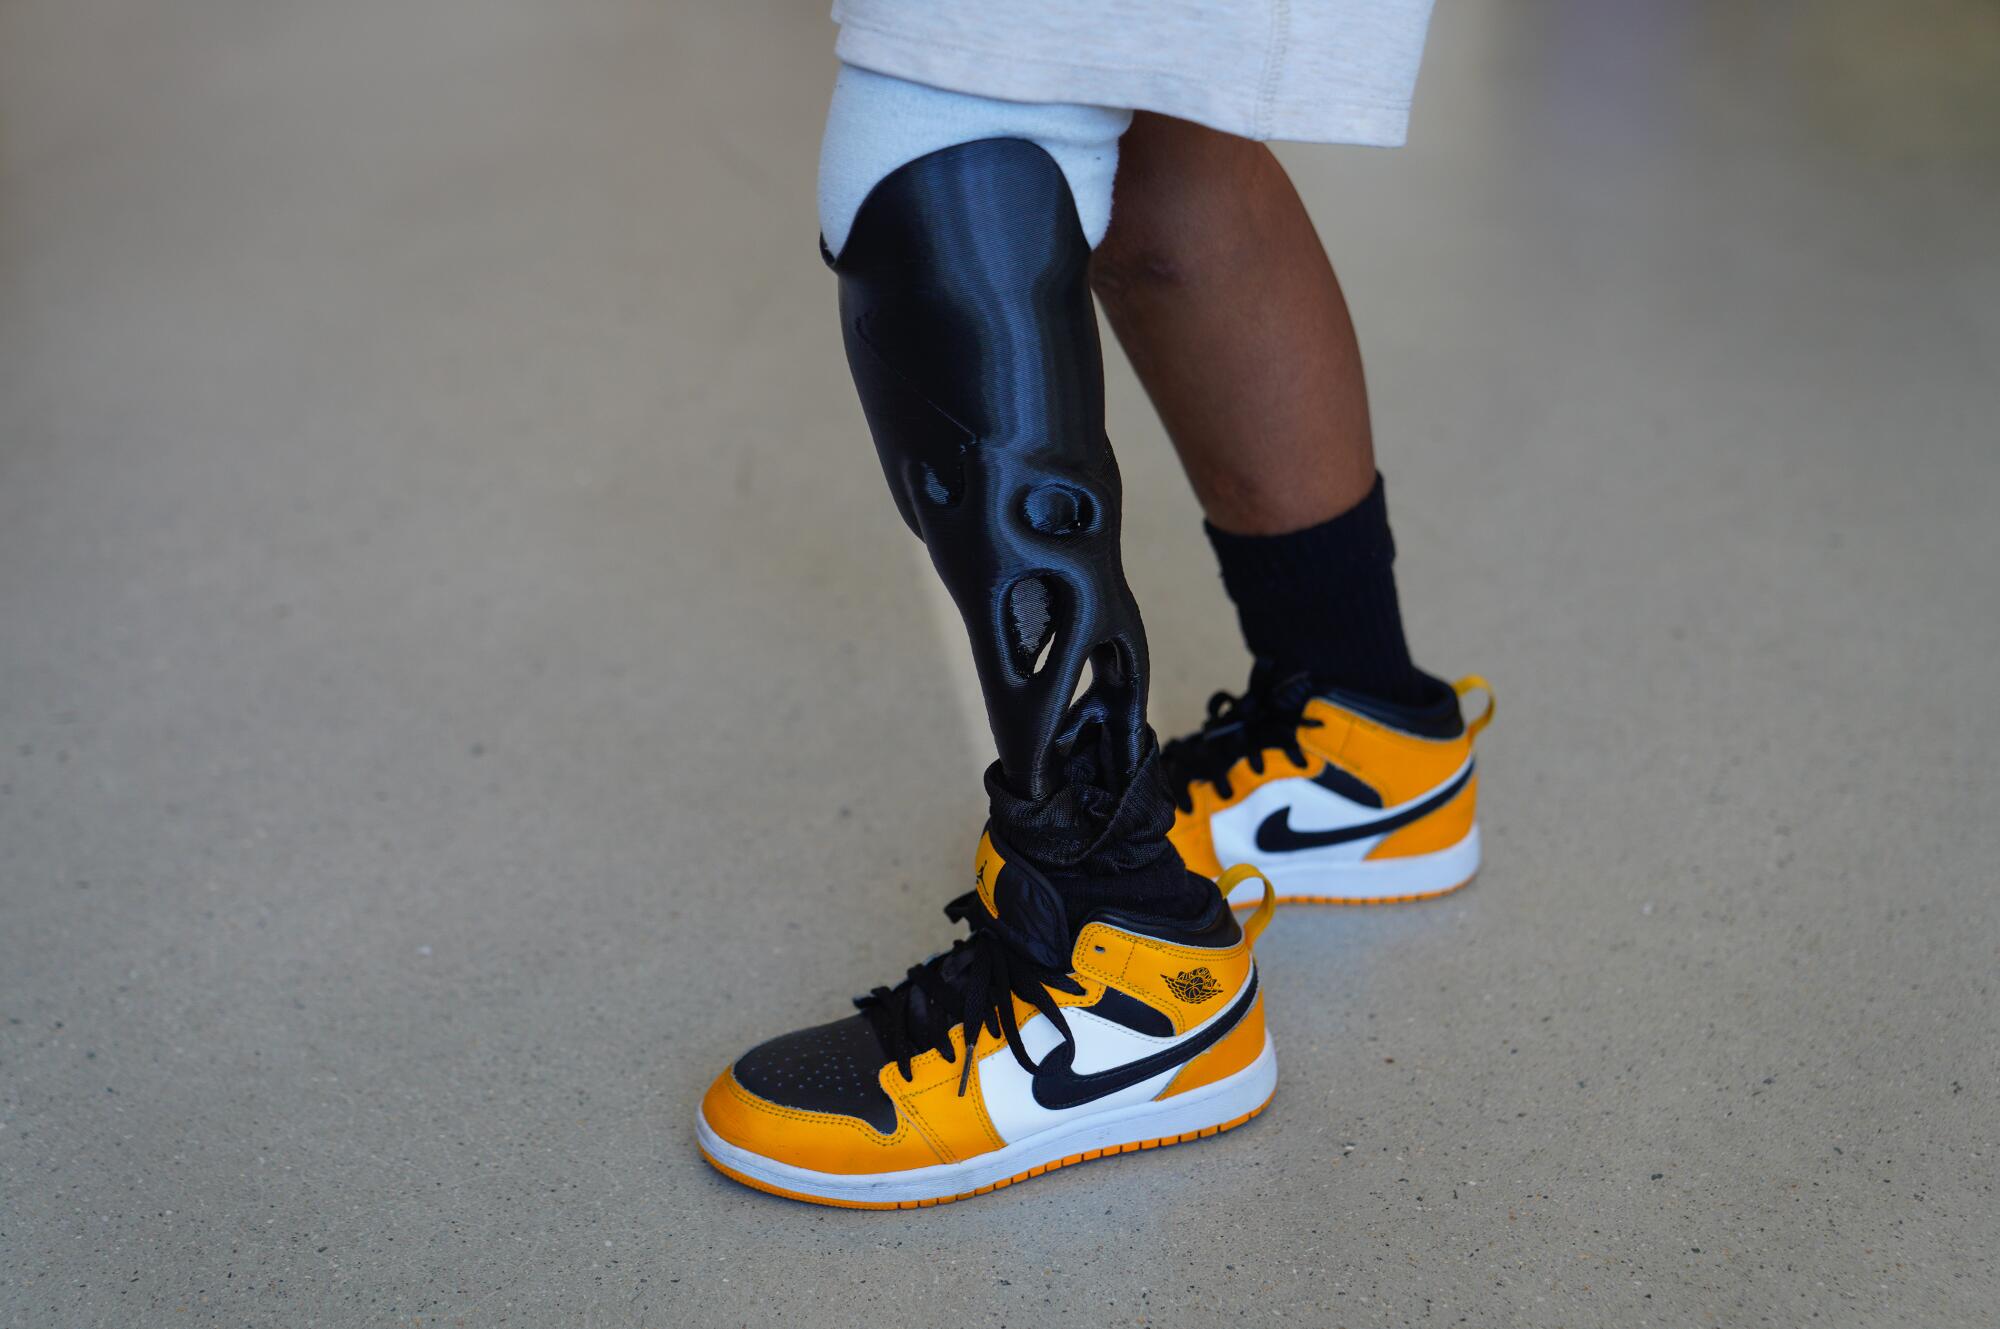 Jonah Villamil takes his new 3-D printed prosthetic limb for a test walk.